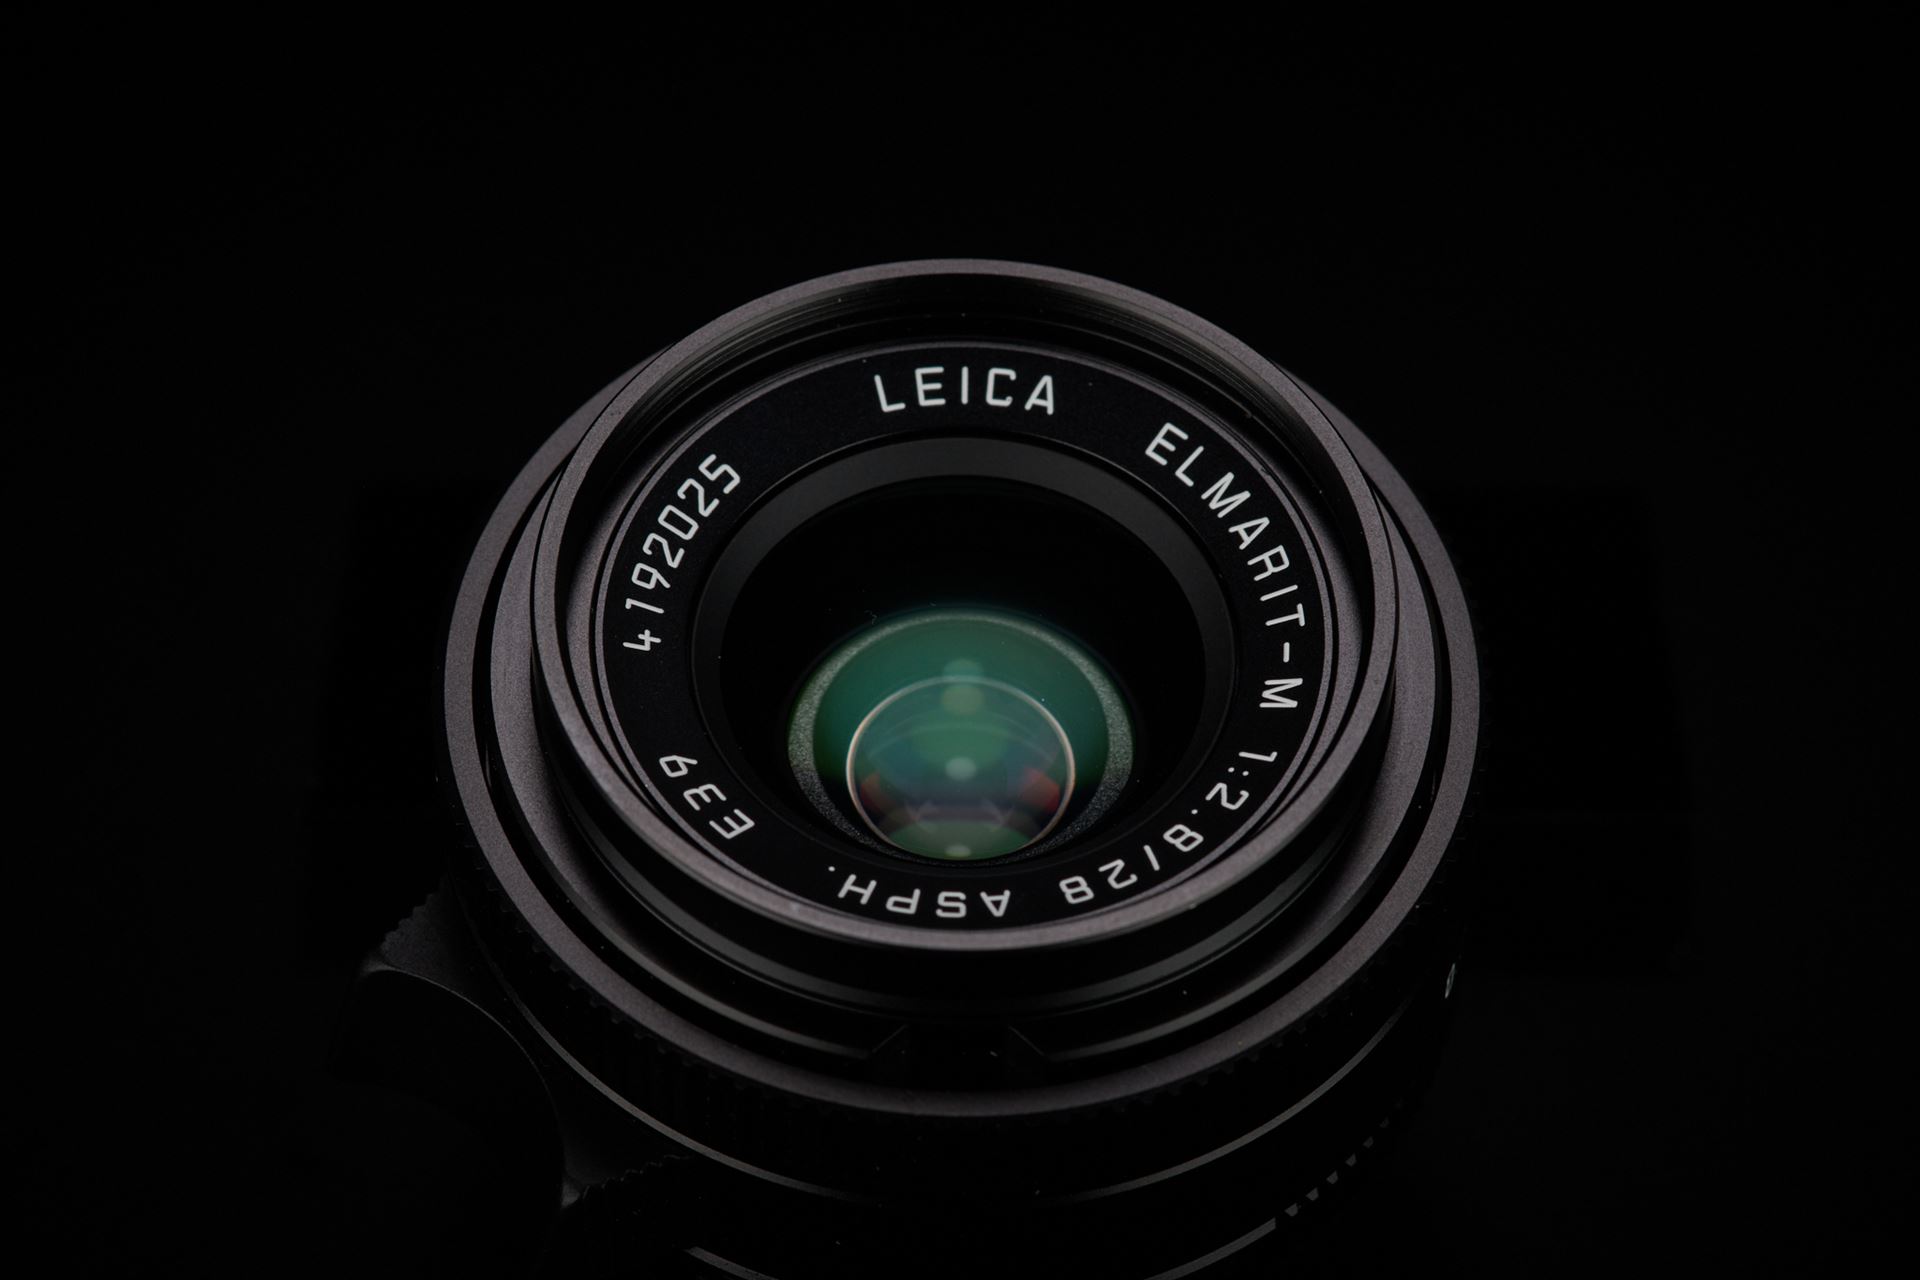 Picture of Leica Elmarit-M 28mm f/2.8 ASPH. Ver.1 Black